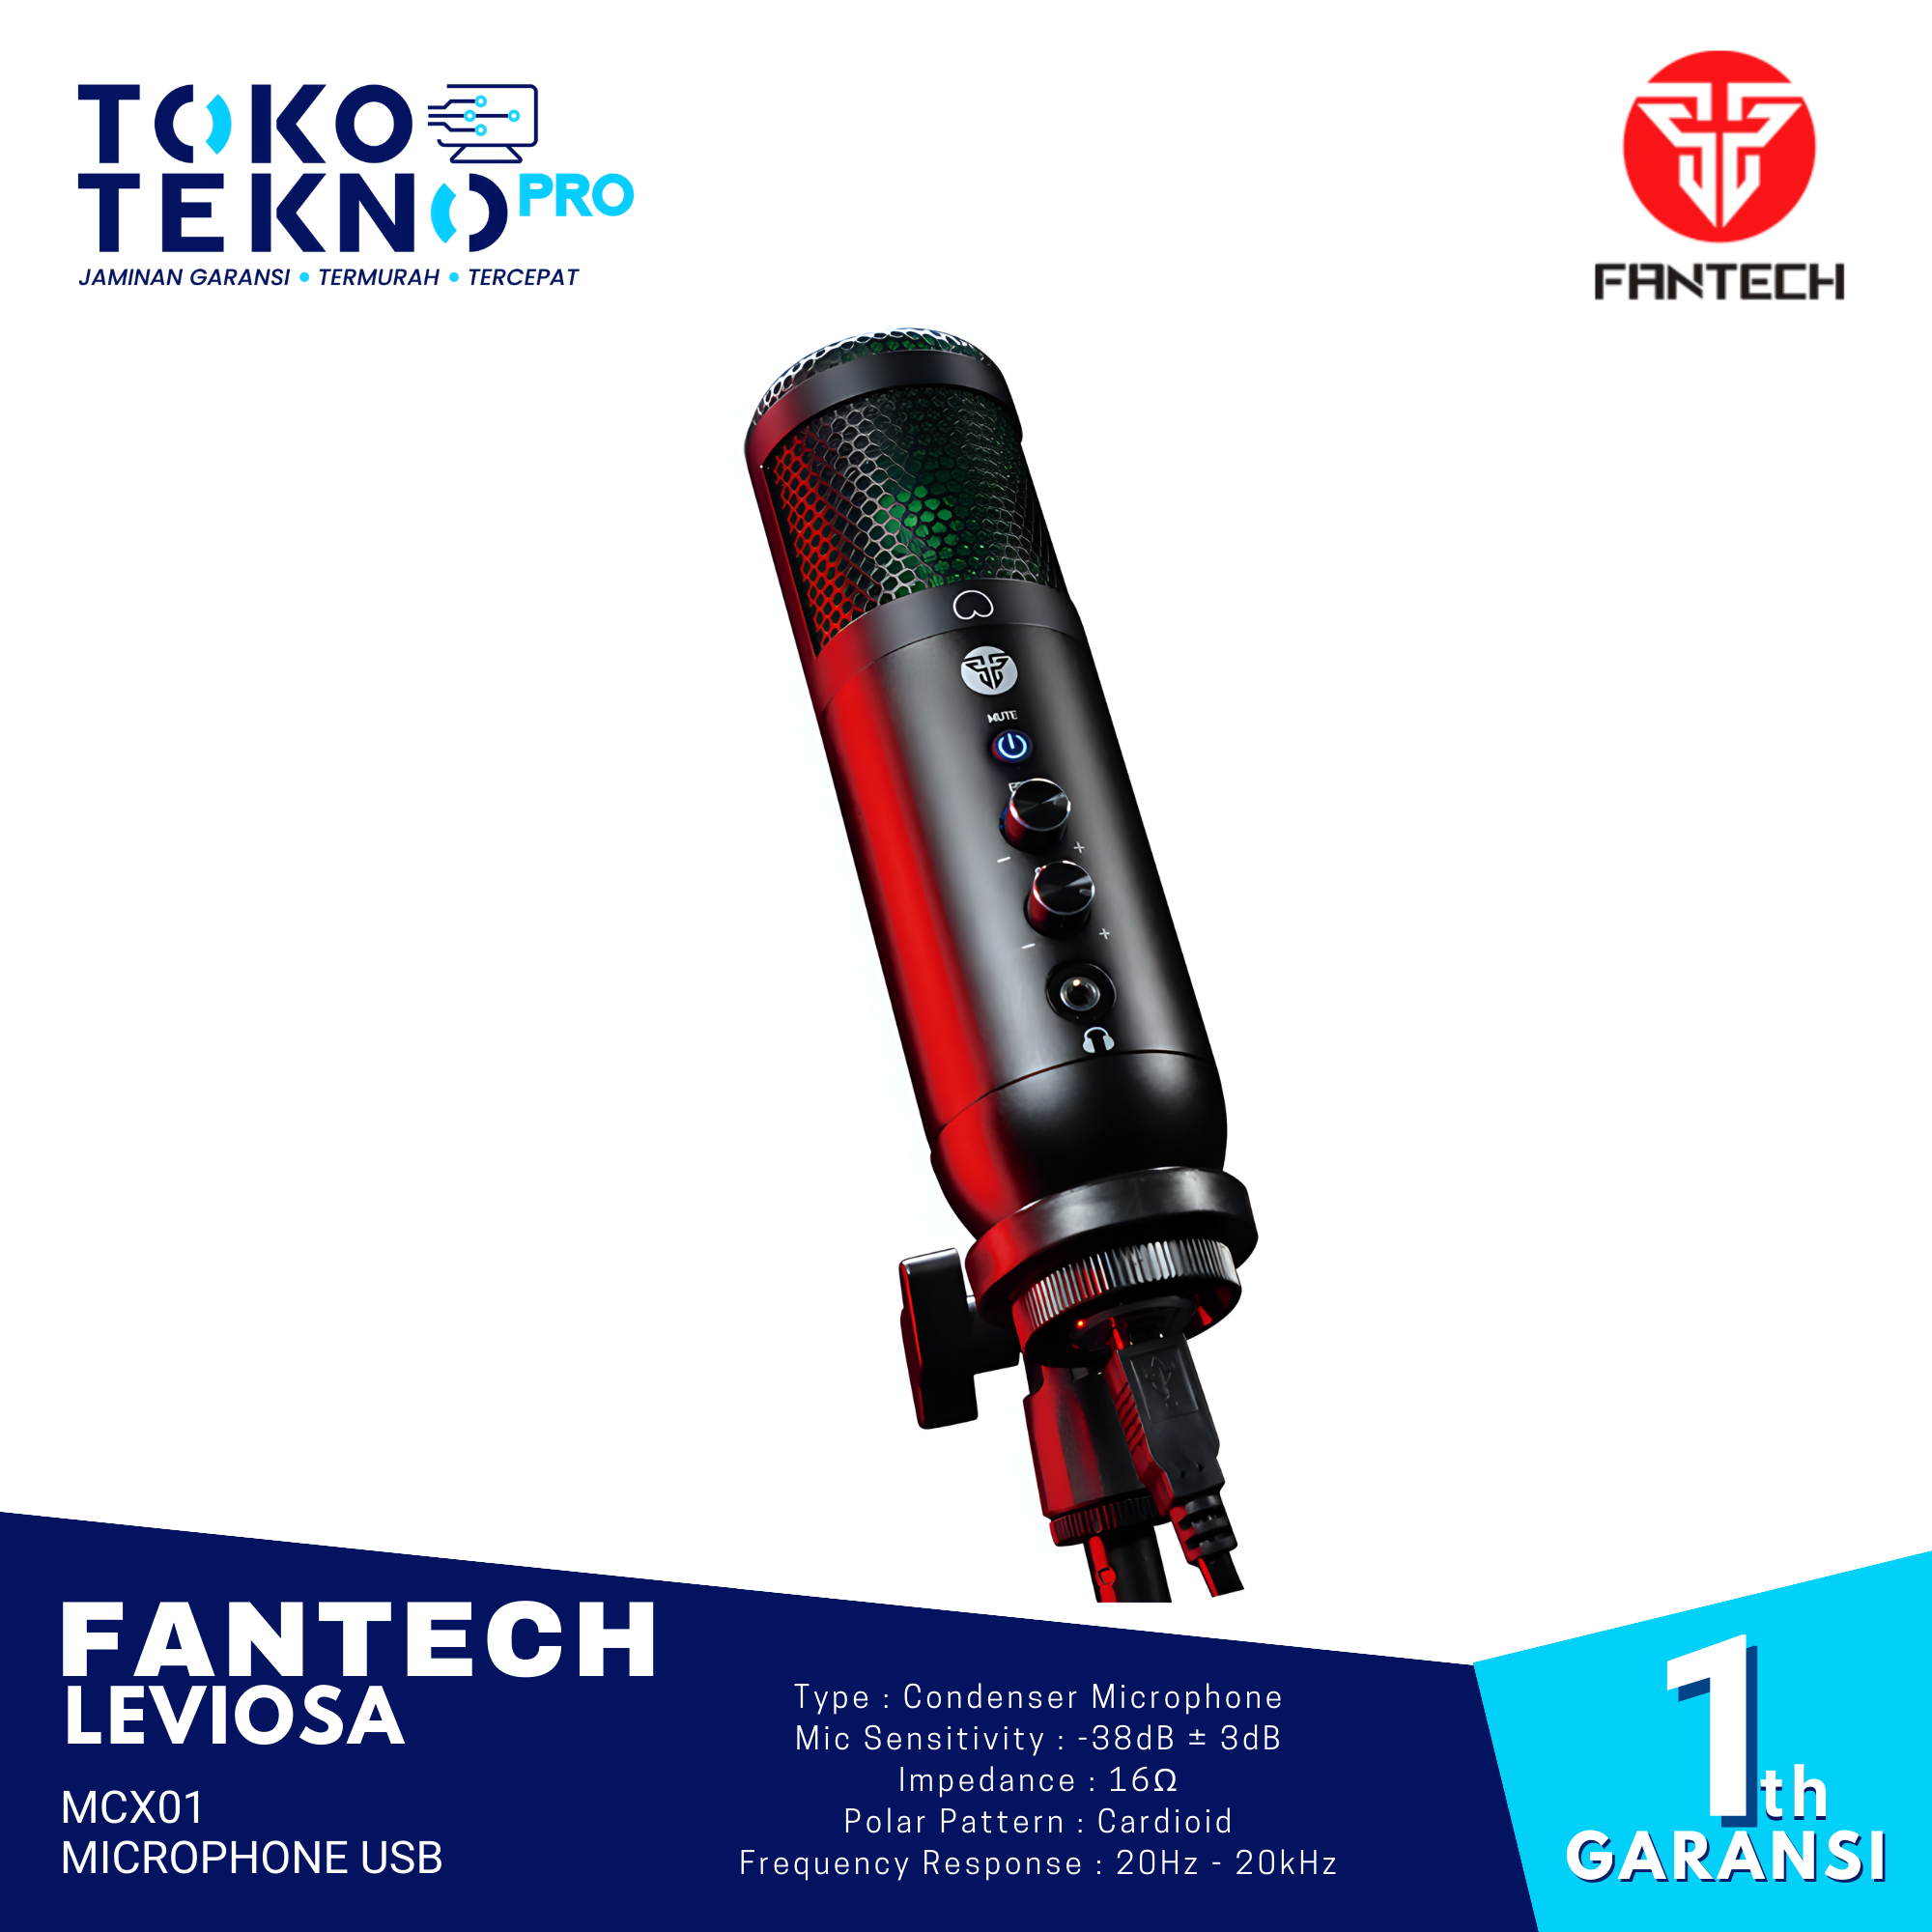 Fantech Leviosa MCX01 Microphone USB